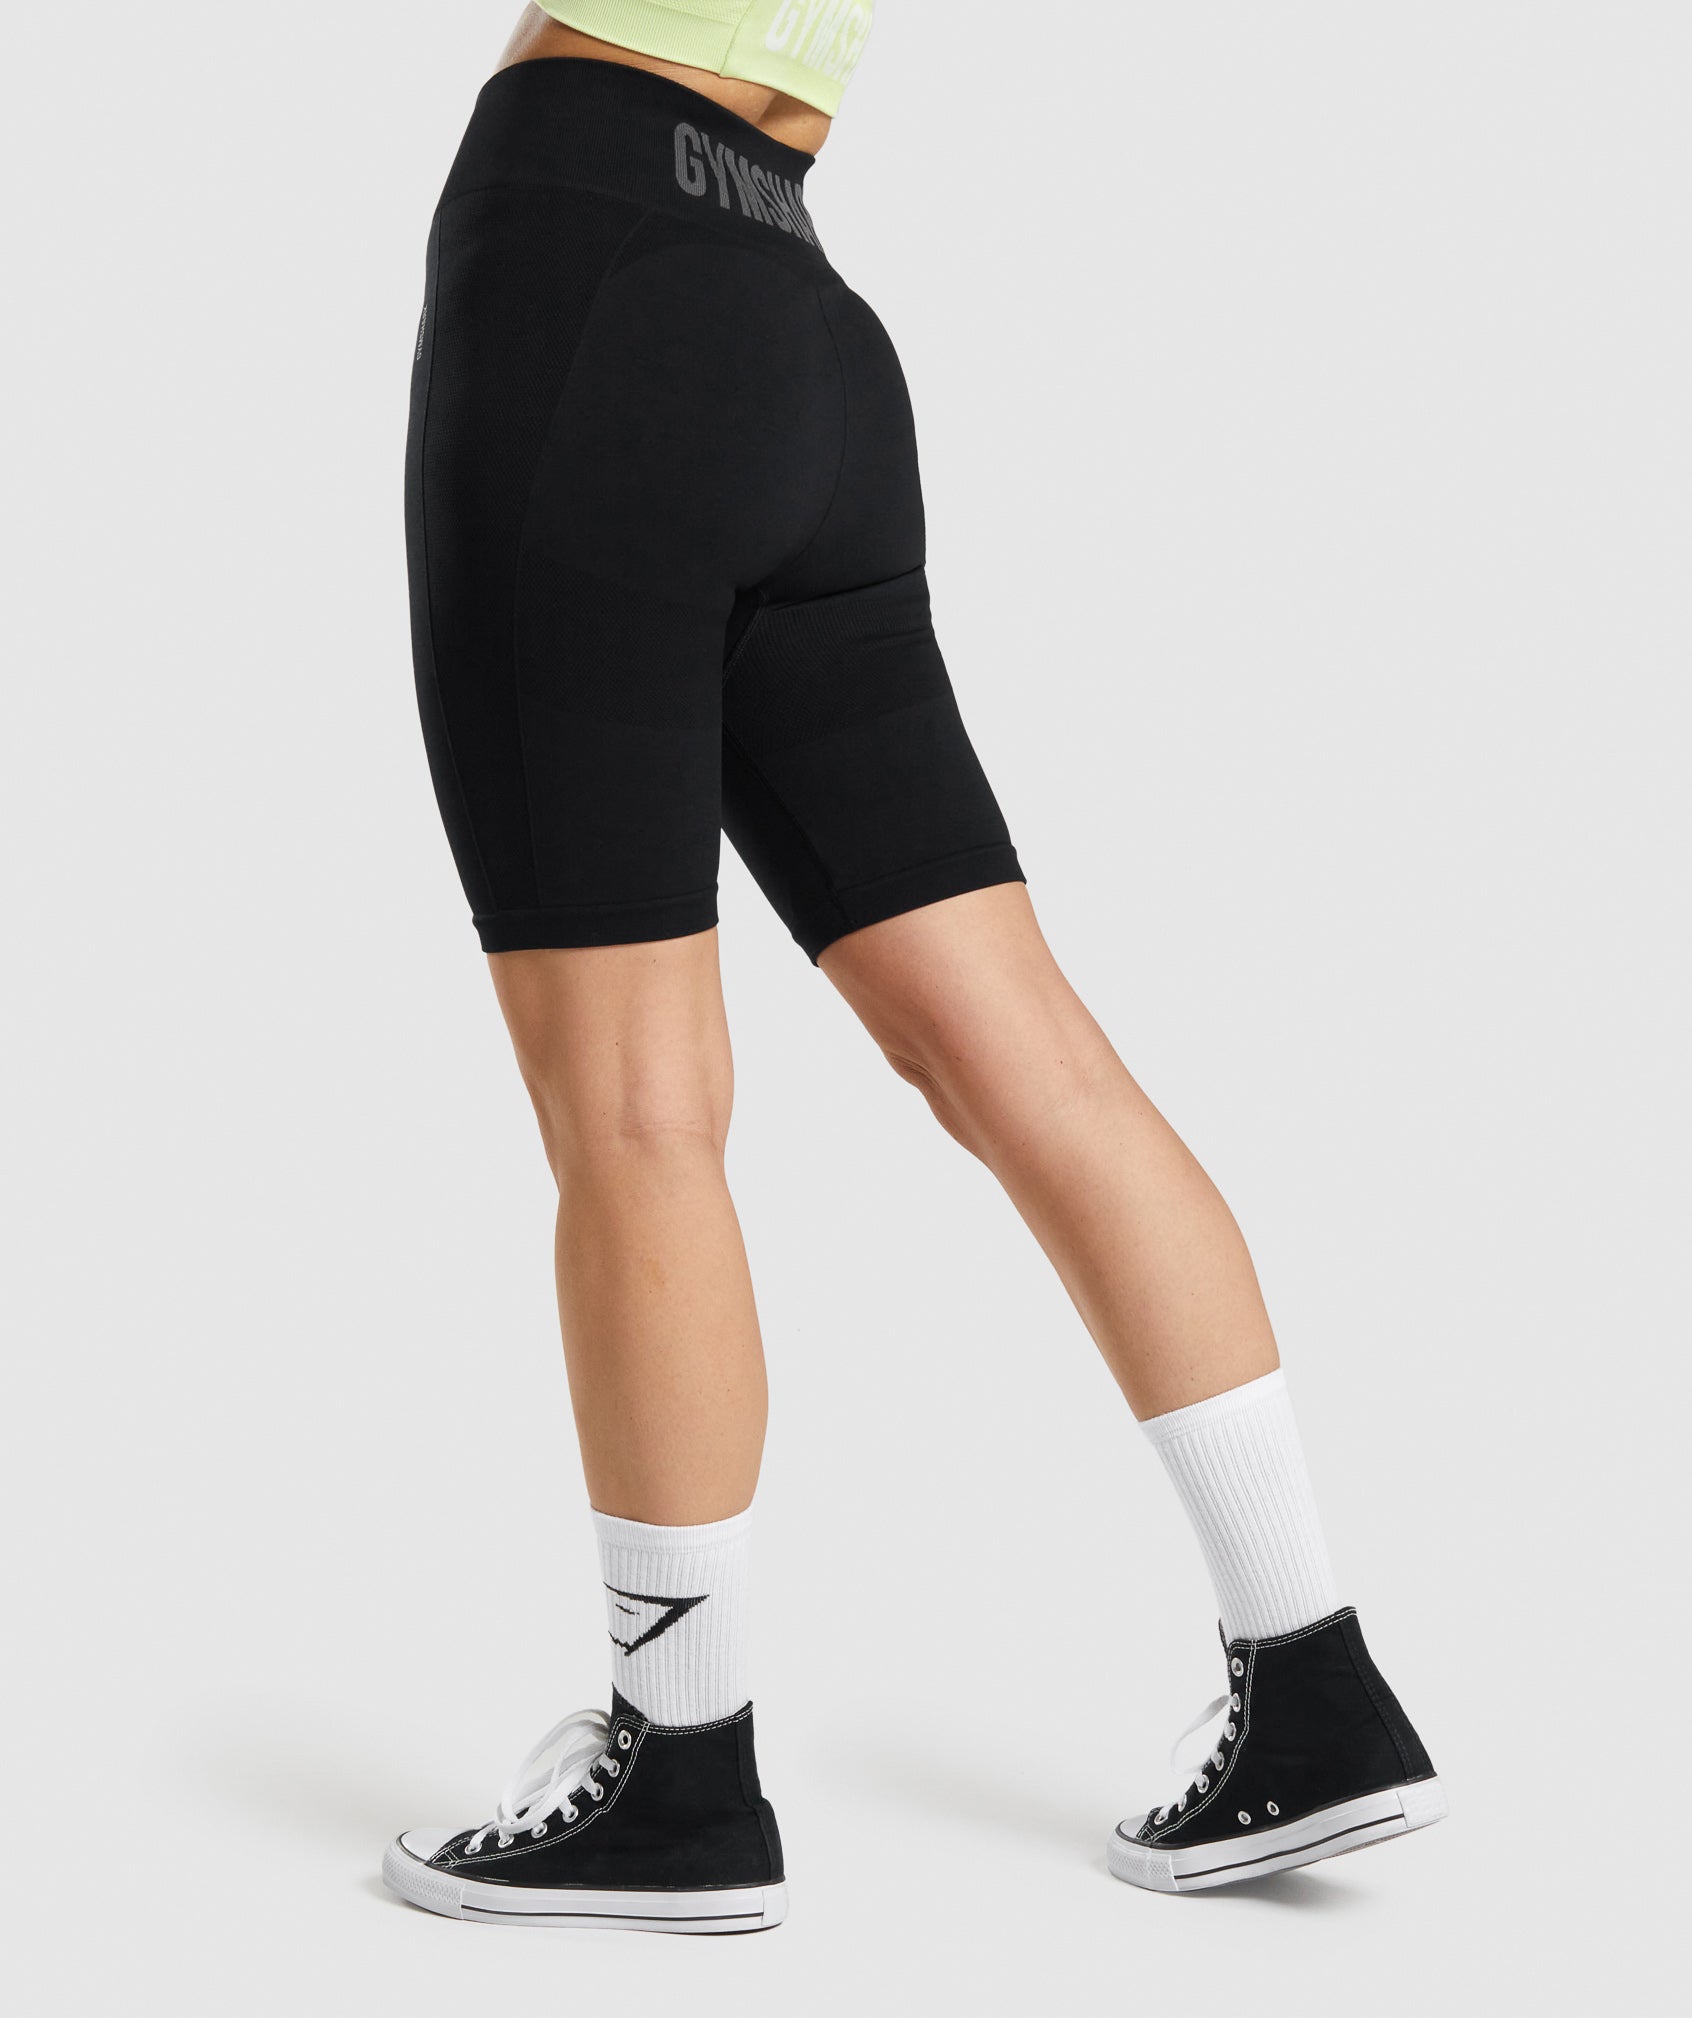 Flex Cycling Shorts in Black/Charcoal